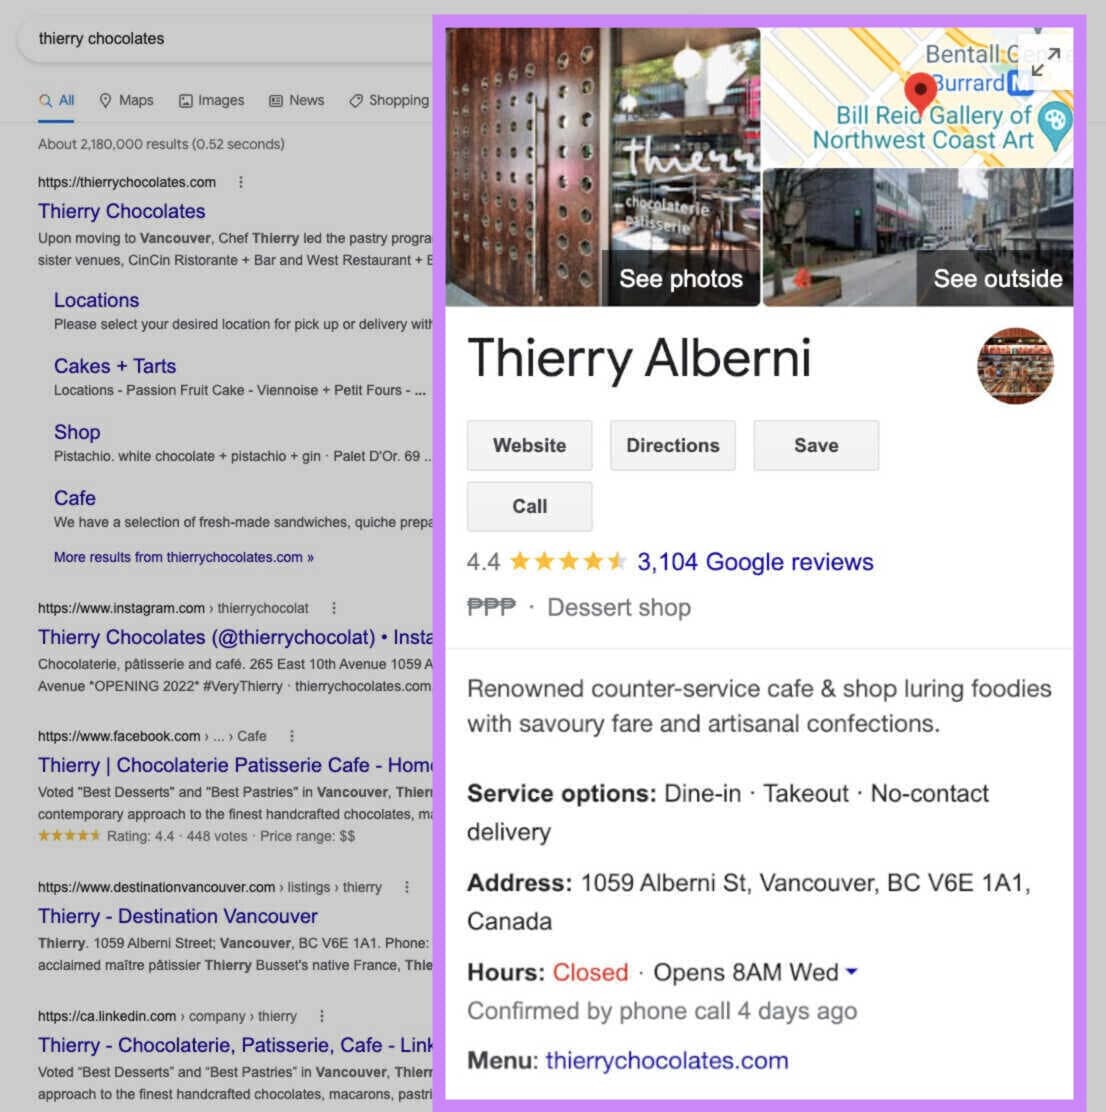 Thierry Alberni's Google Business Profile